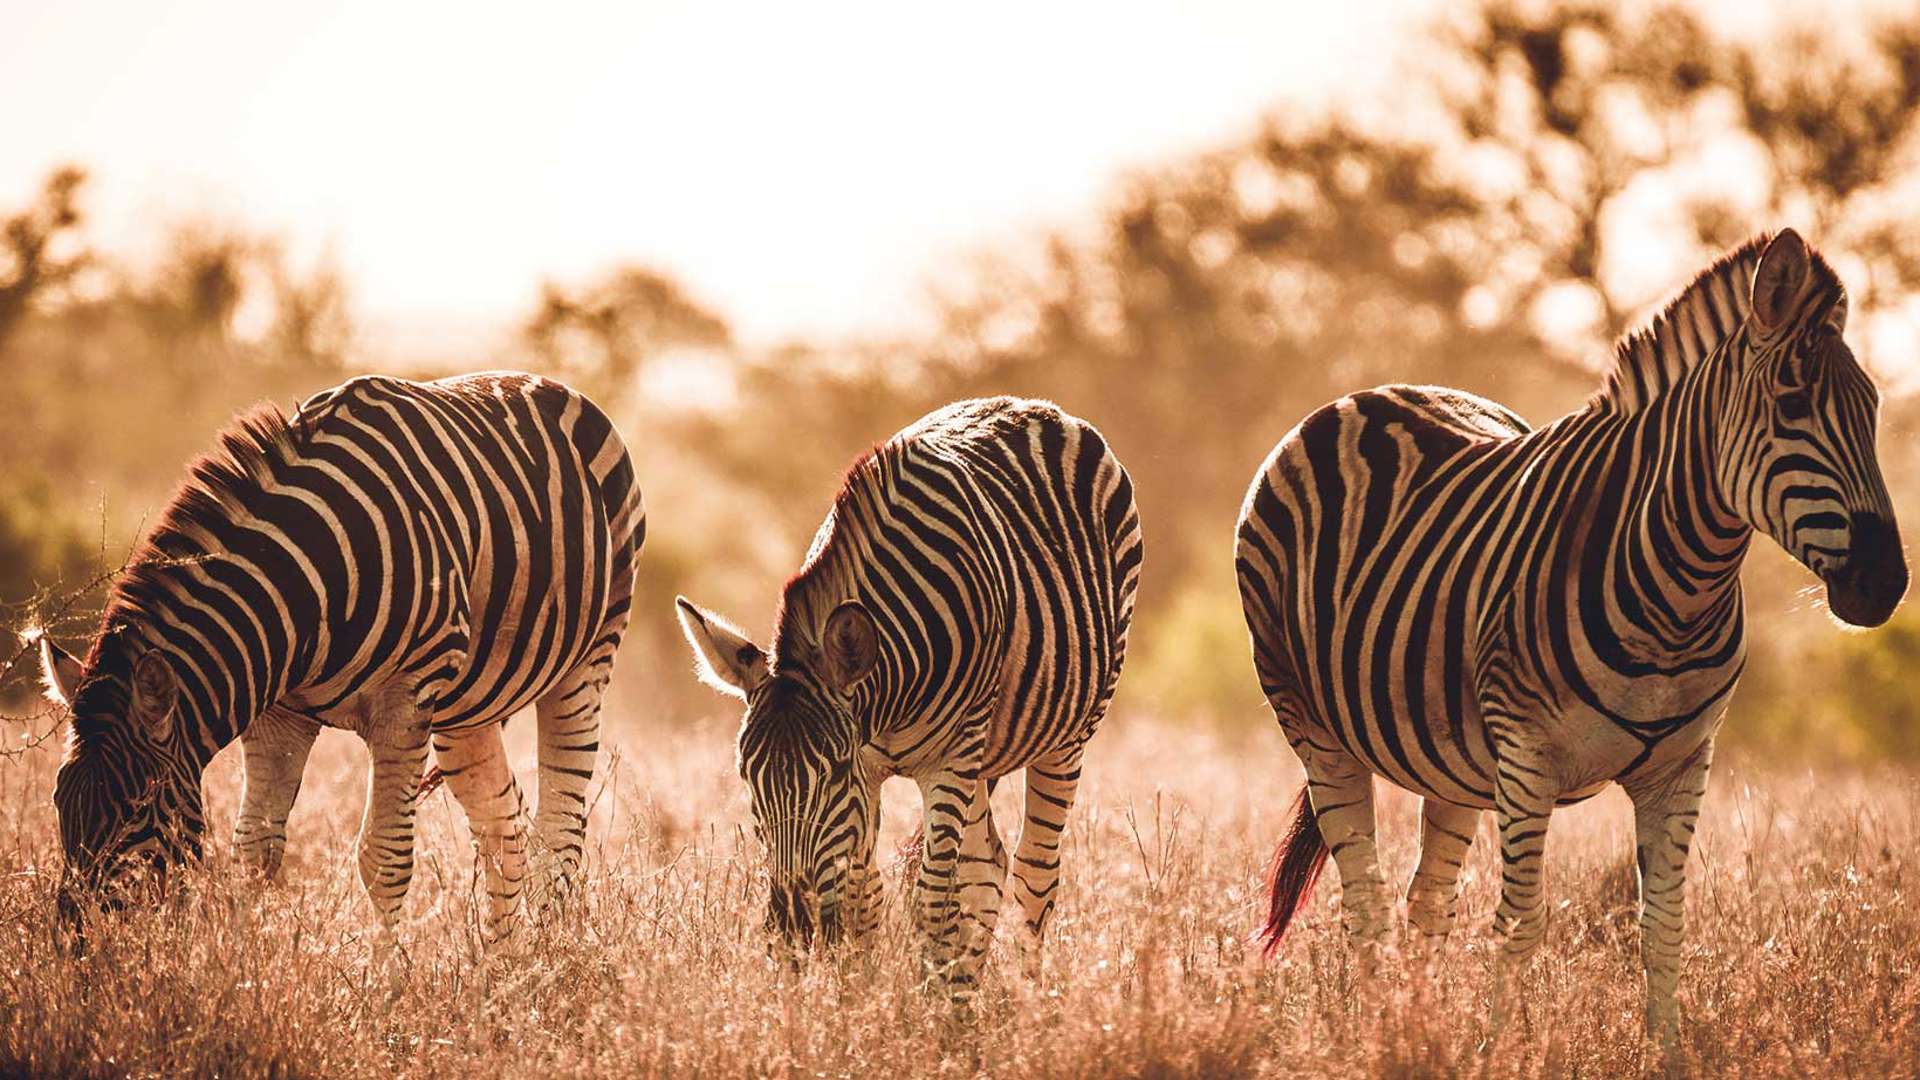 Zebra, South Africa